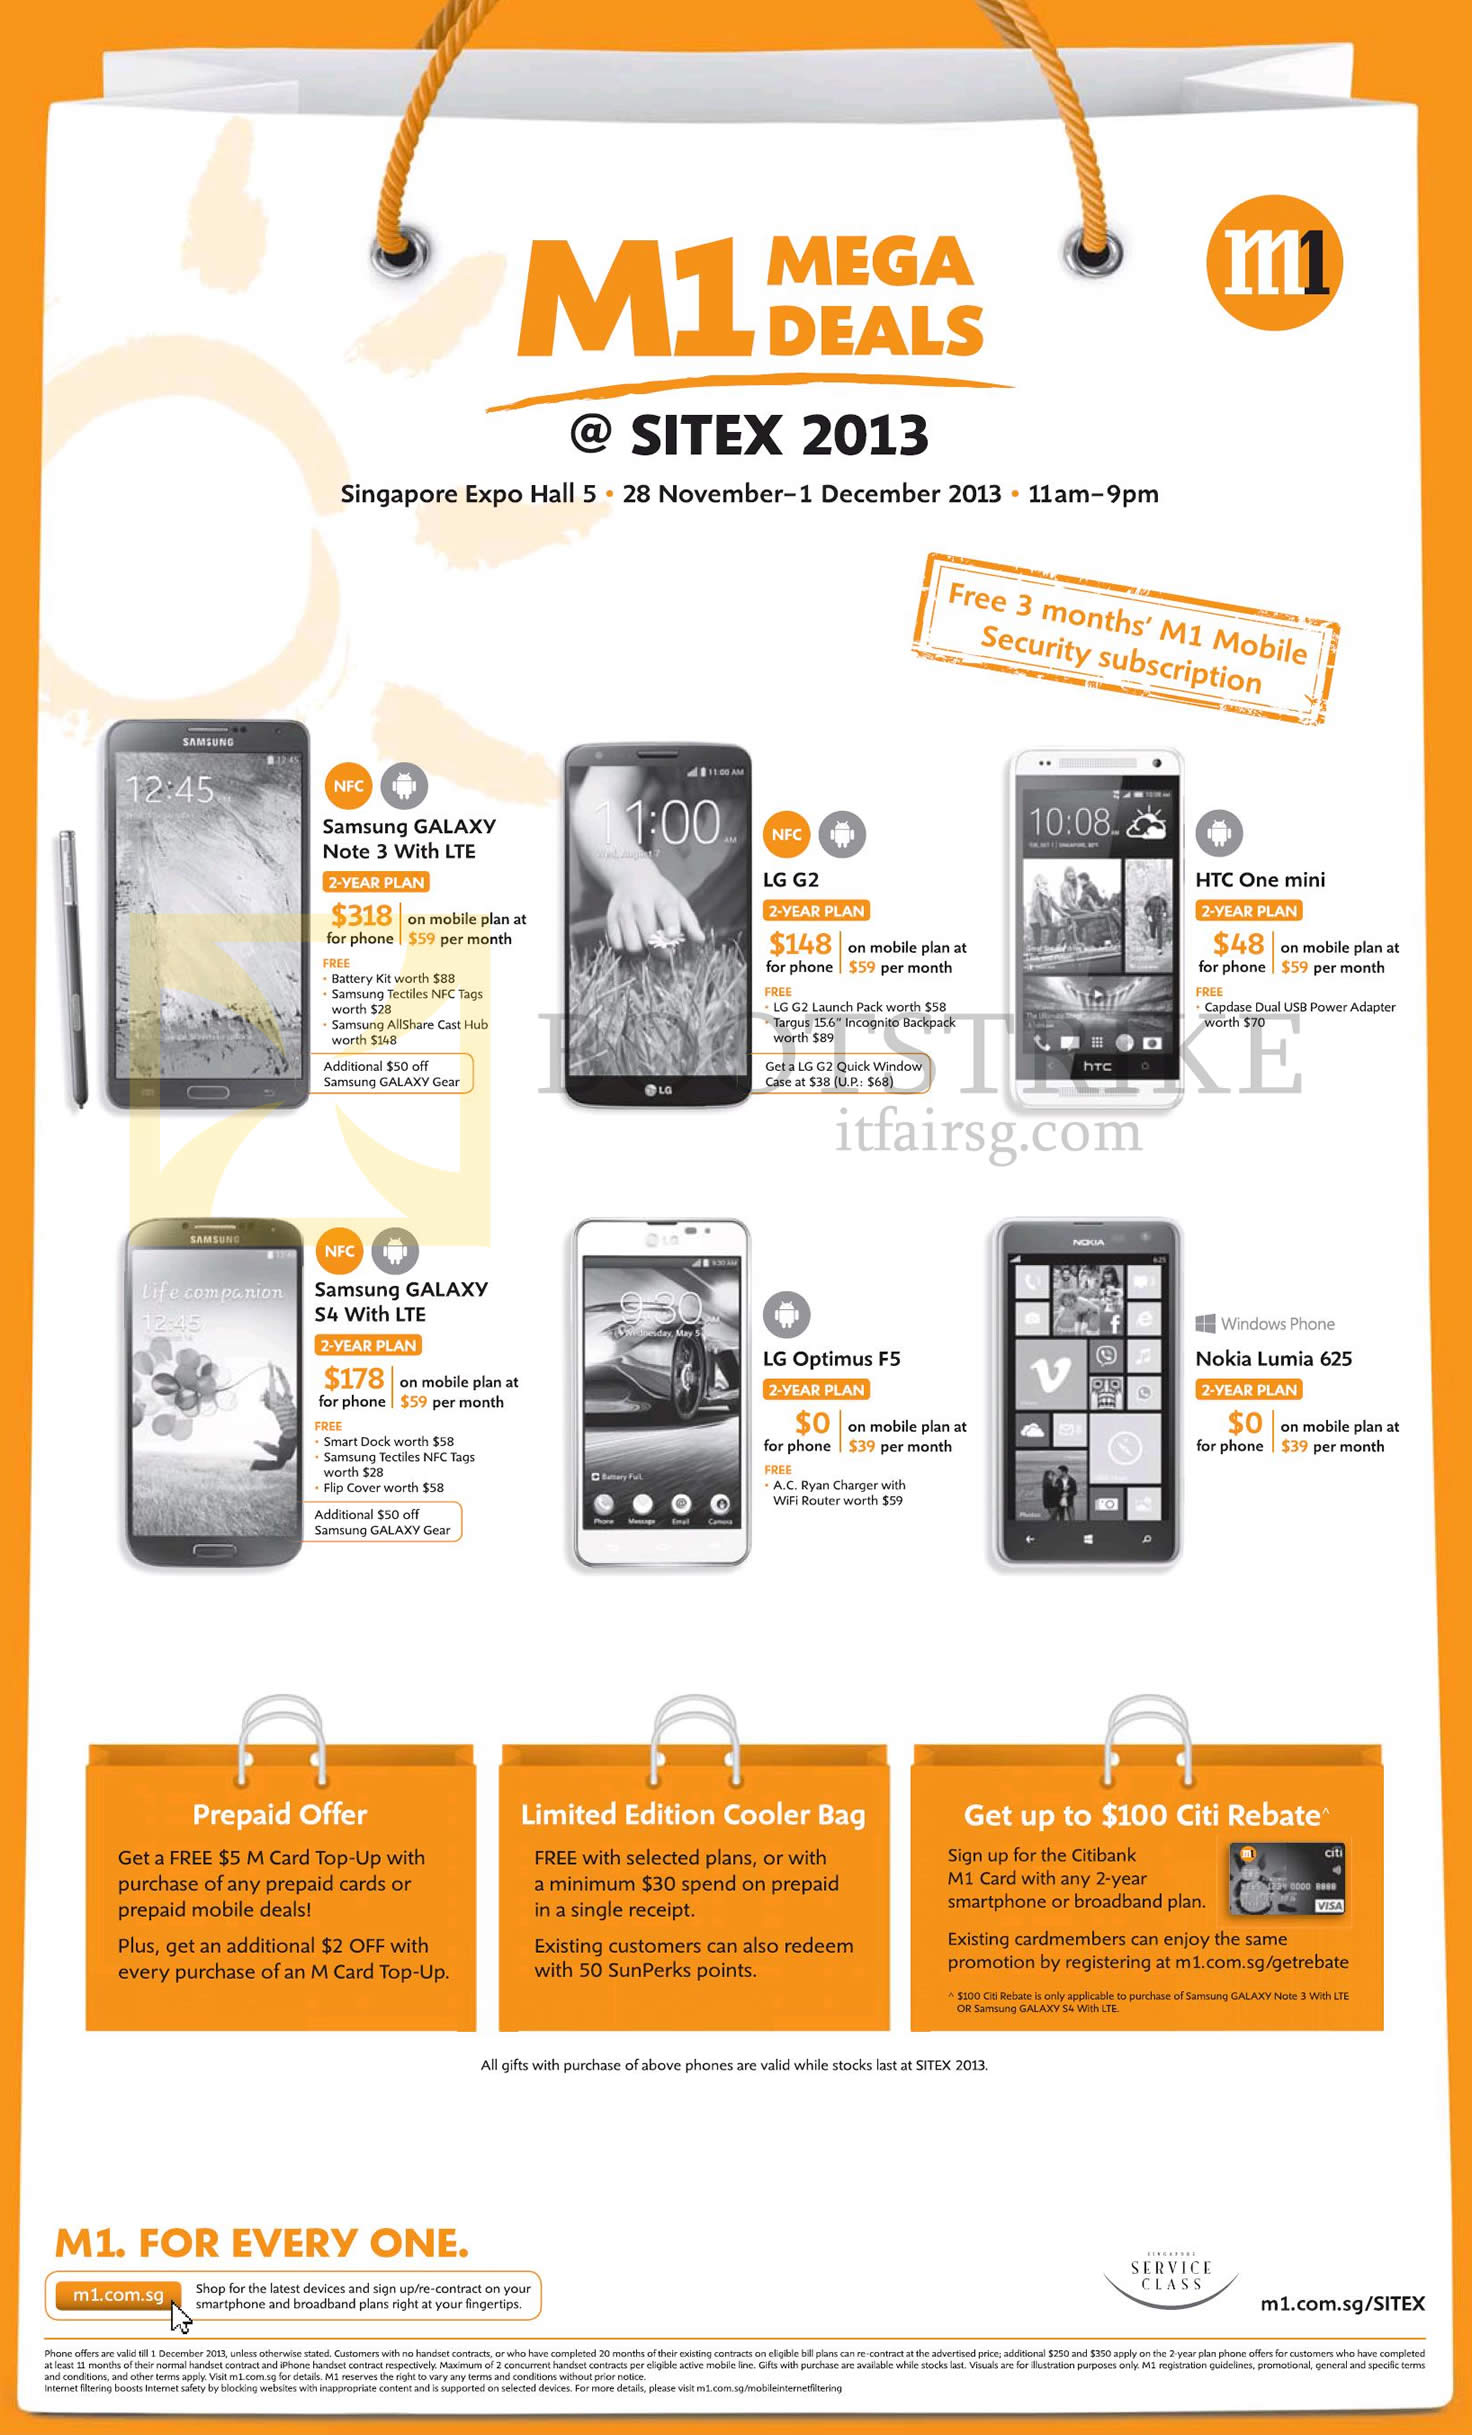 SITEX 2013 price list image brochure of M1 Mobile Samsung Galaxy Ntoe 3, S4, LG G2, Optimus F5, HTC One Mini, Nokia Lumia 625